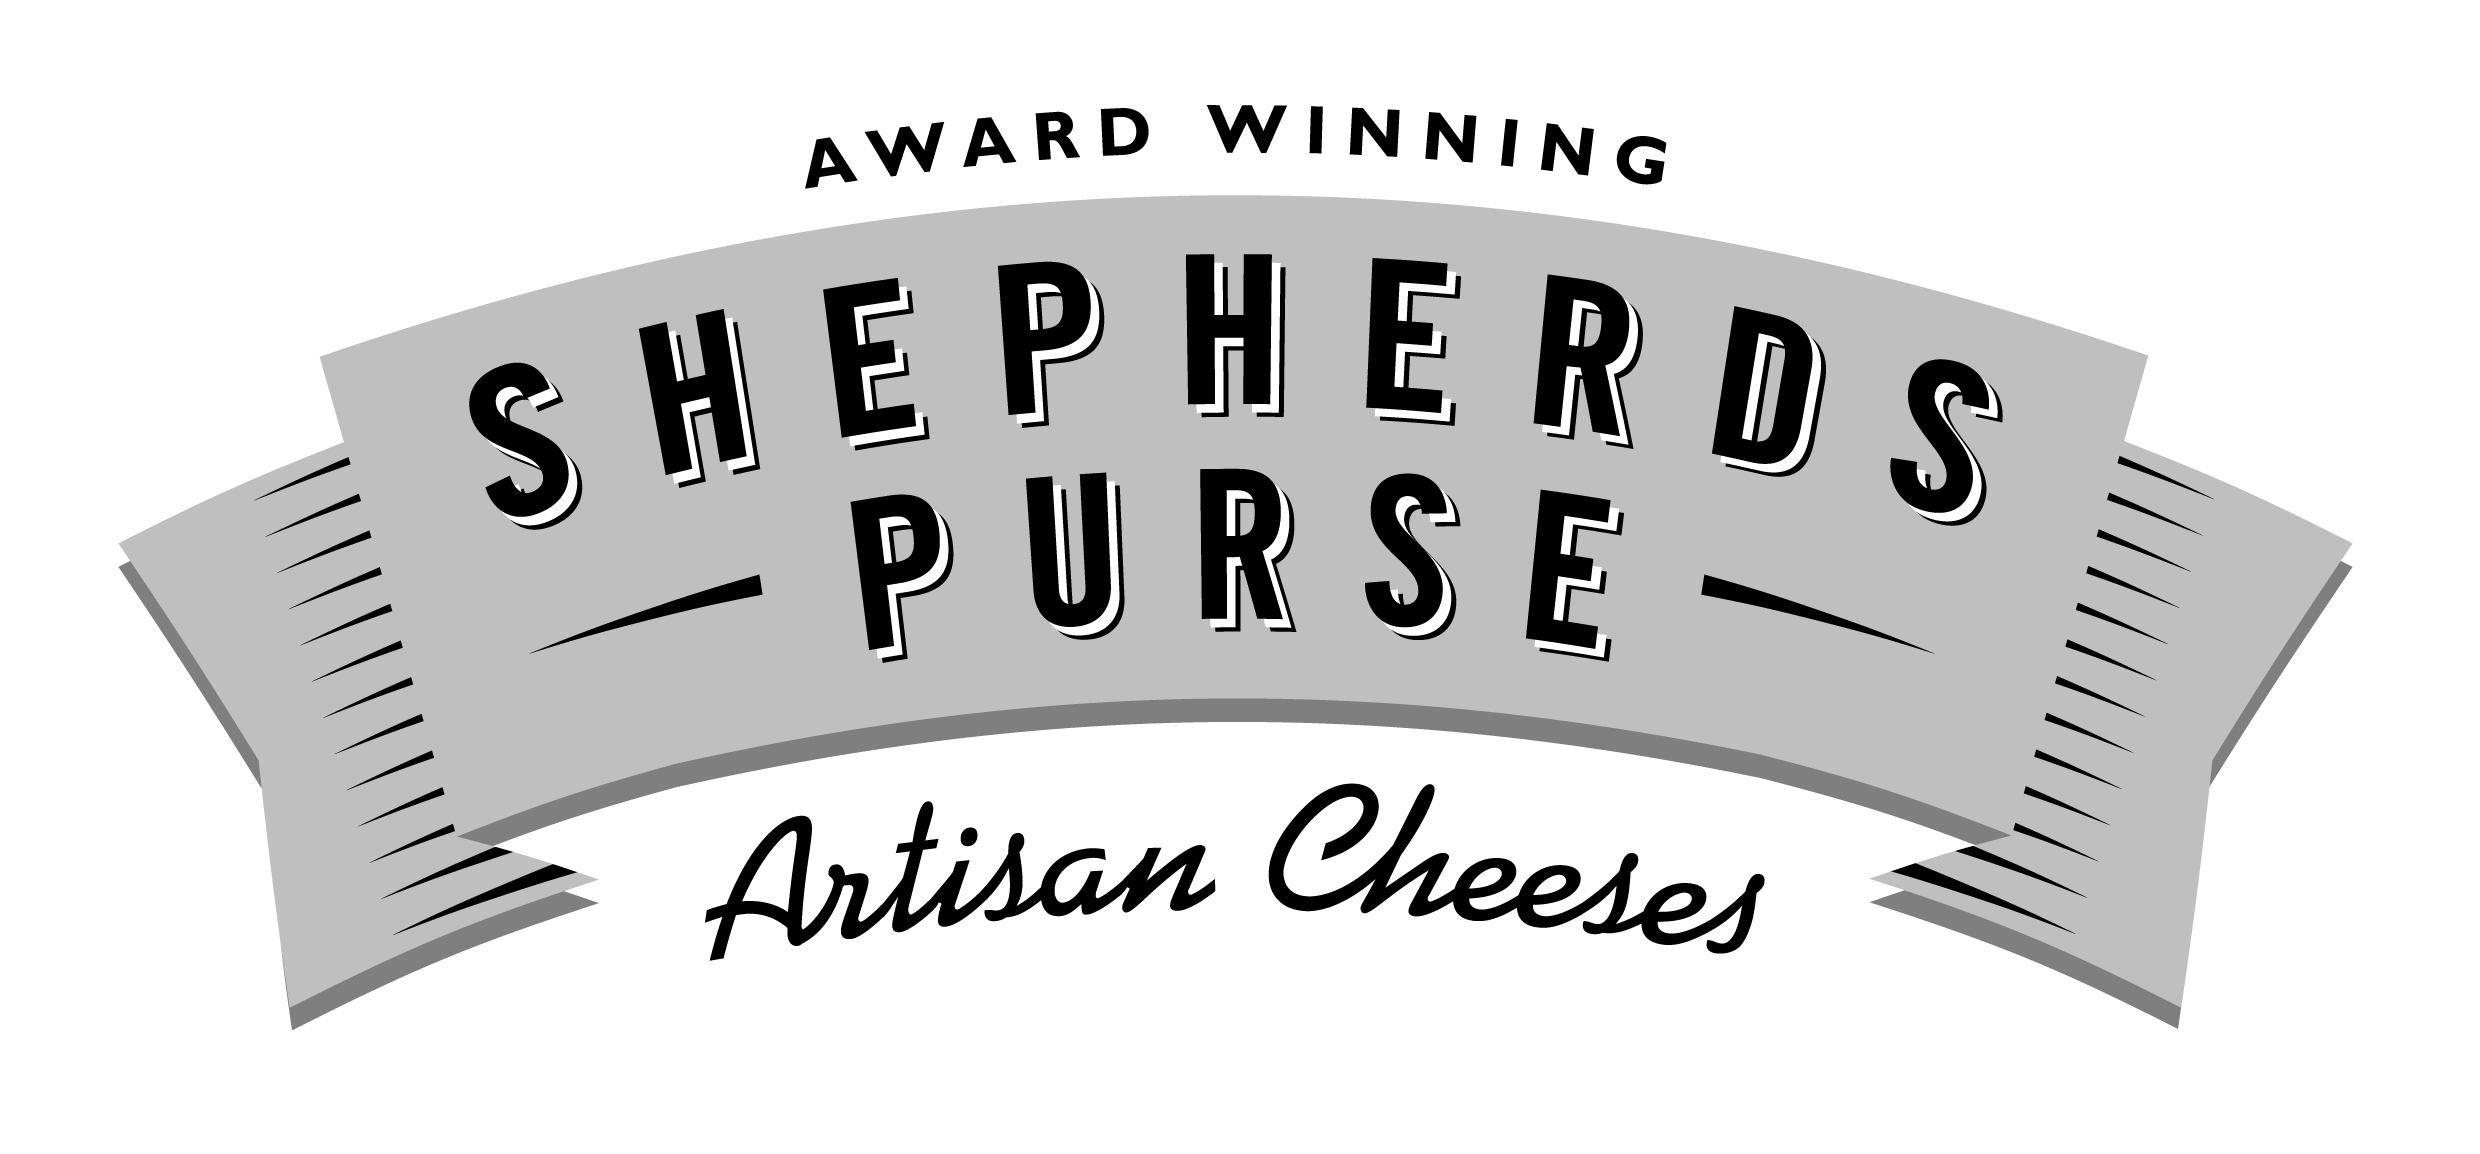 Shepherds Purse Cheeses Ltd.